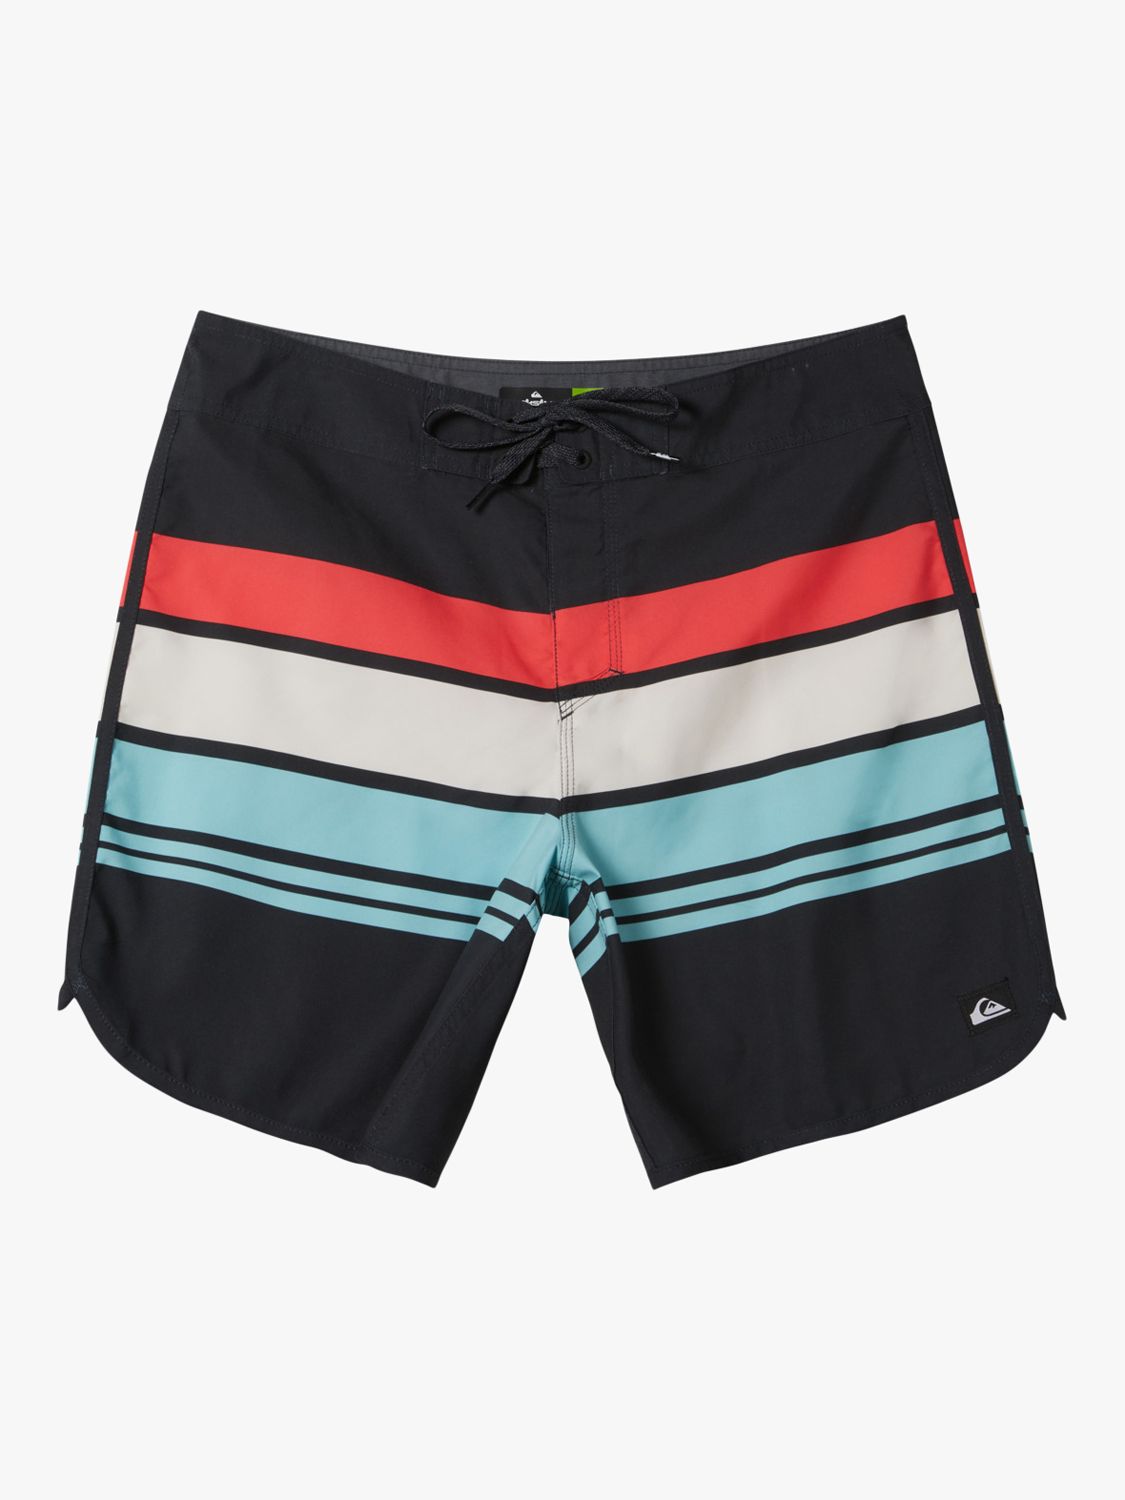 Quiksilver Everyday Stripe Swim Shorts, Black/Multi, M